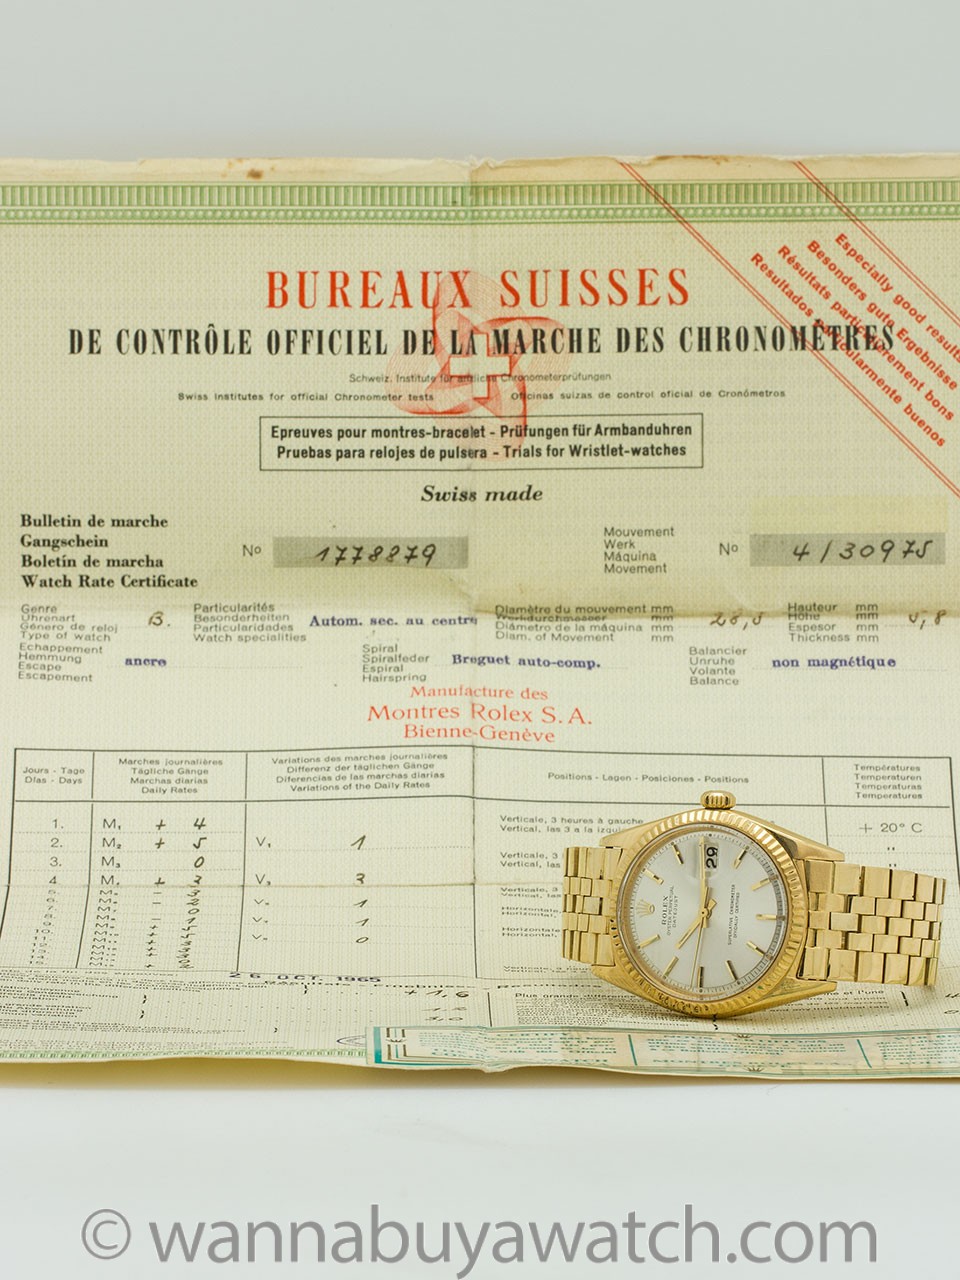 rolex chronometer certificate